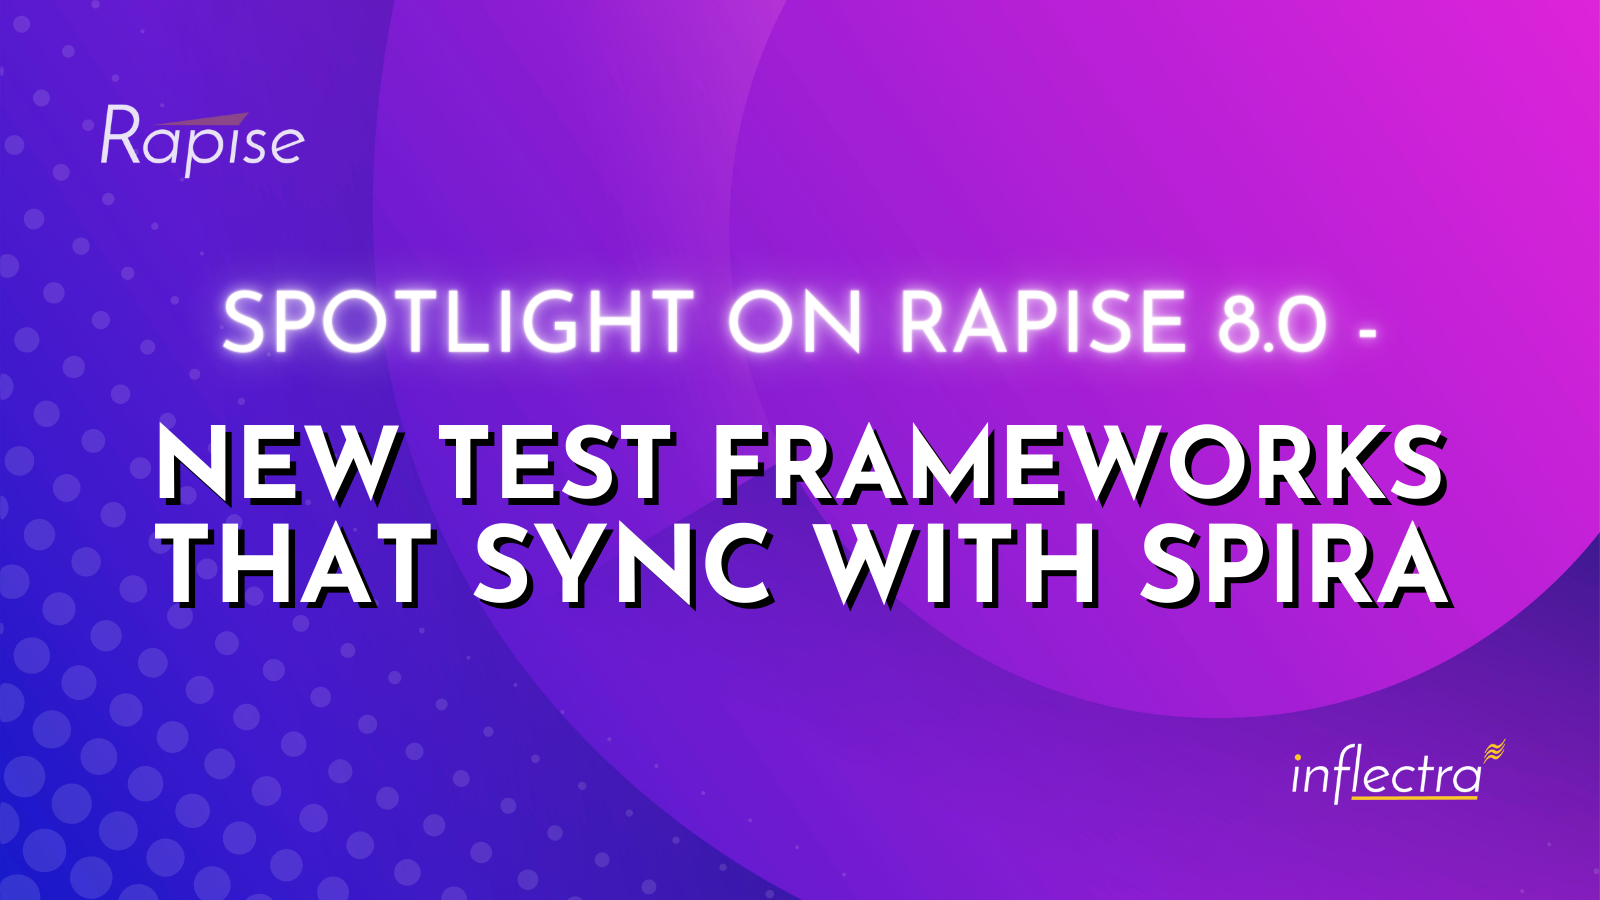 rapise-spotlight-new-test-frameworks-that-sync-with-spira-inflectra-image